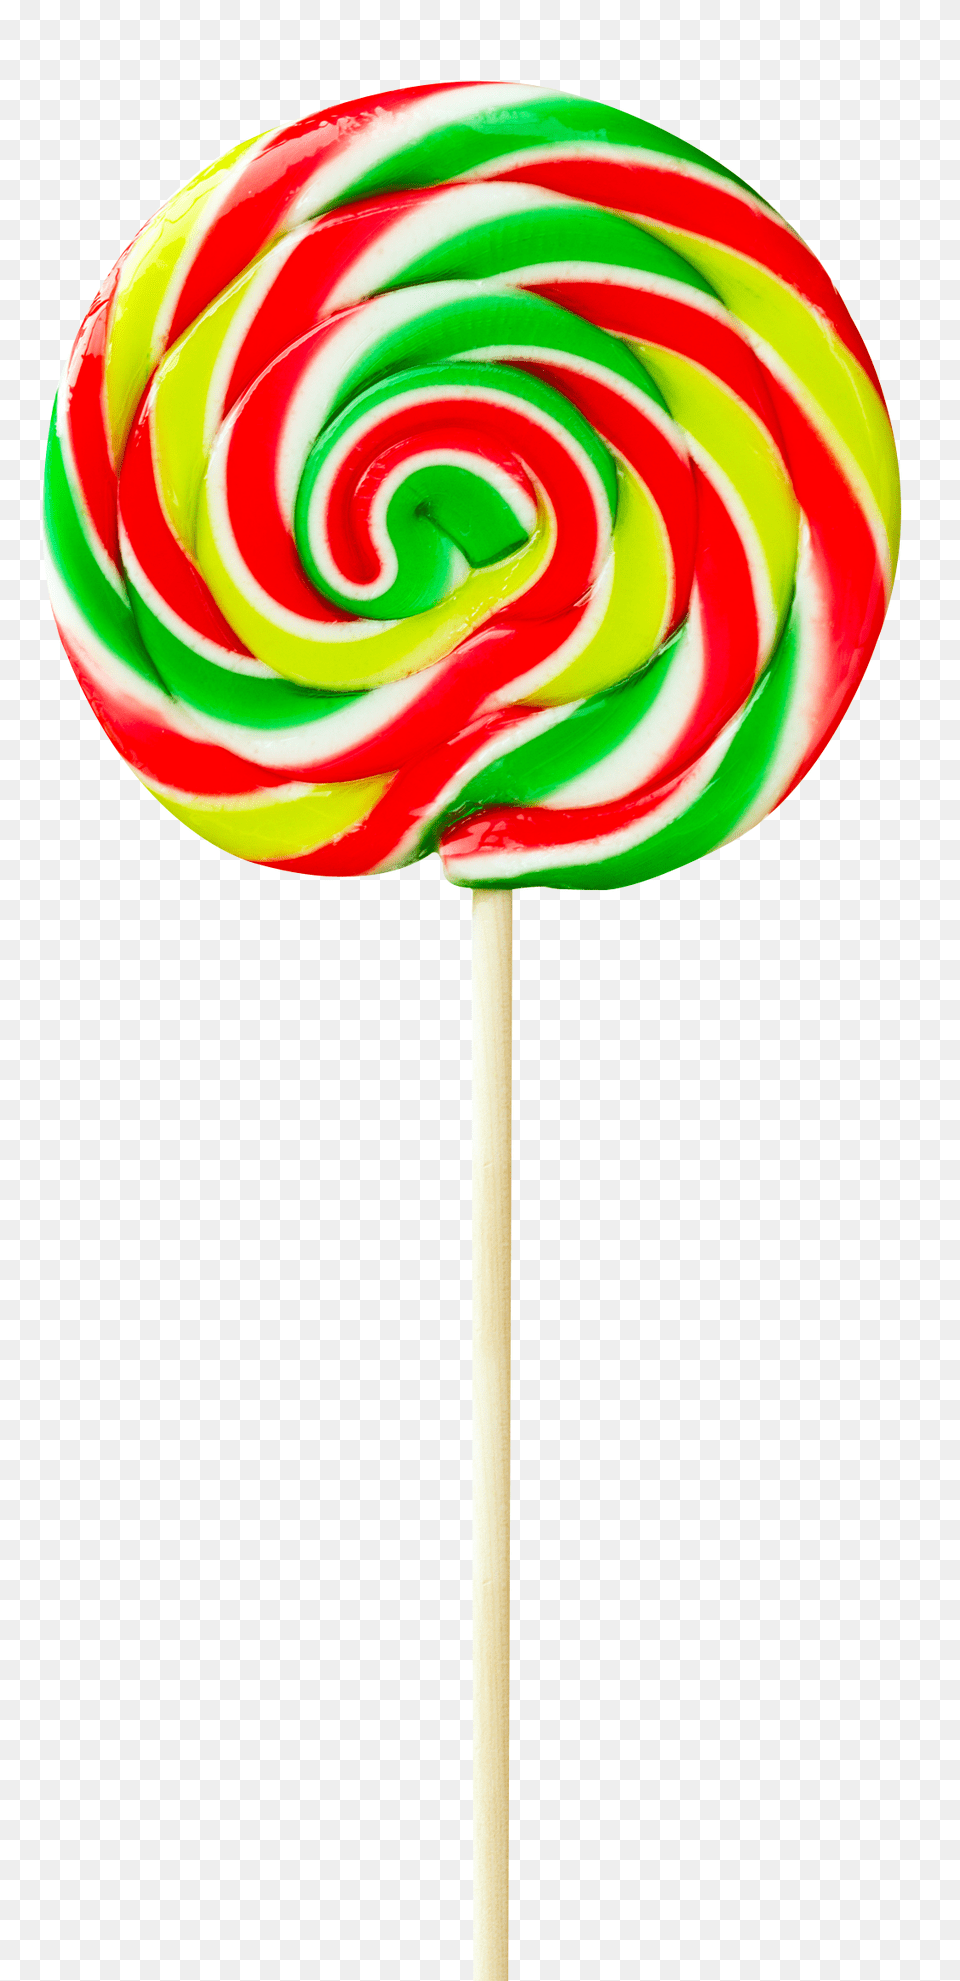 Pngpix Com Lollipop Transparent, Candy, Food, Sweets Png Image